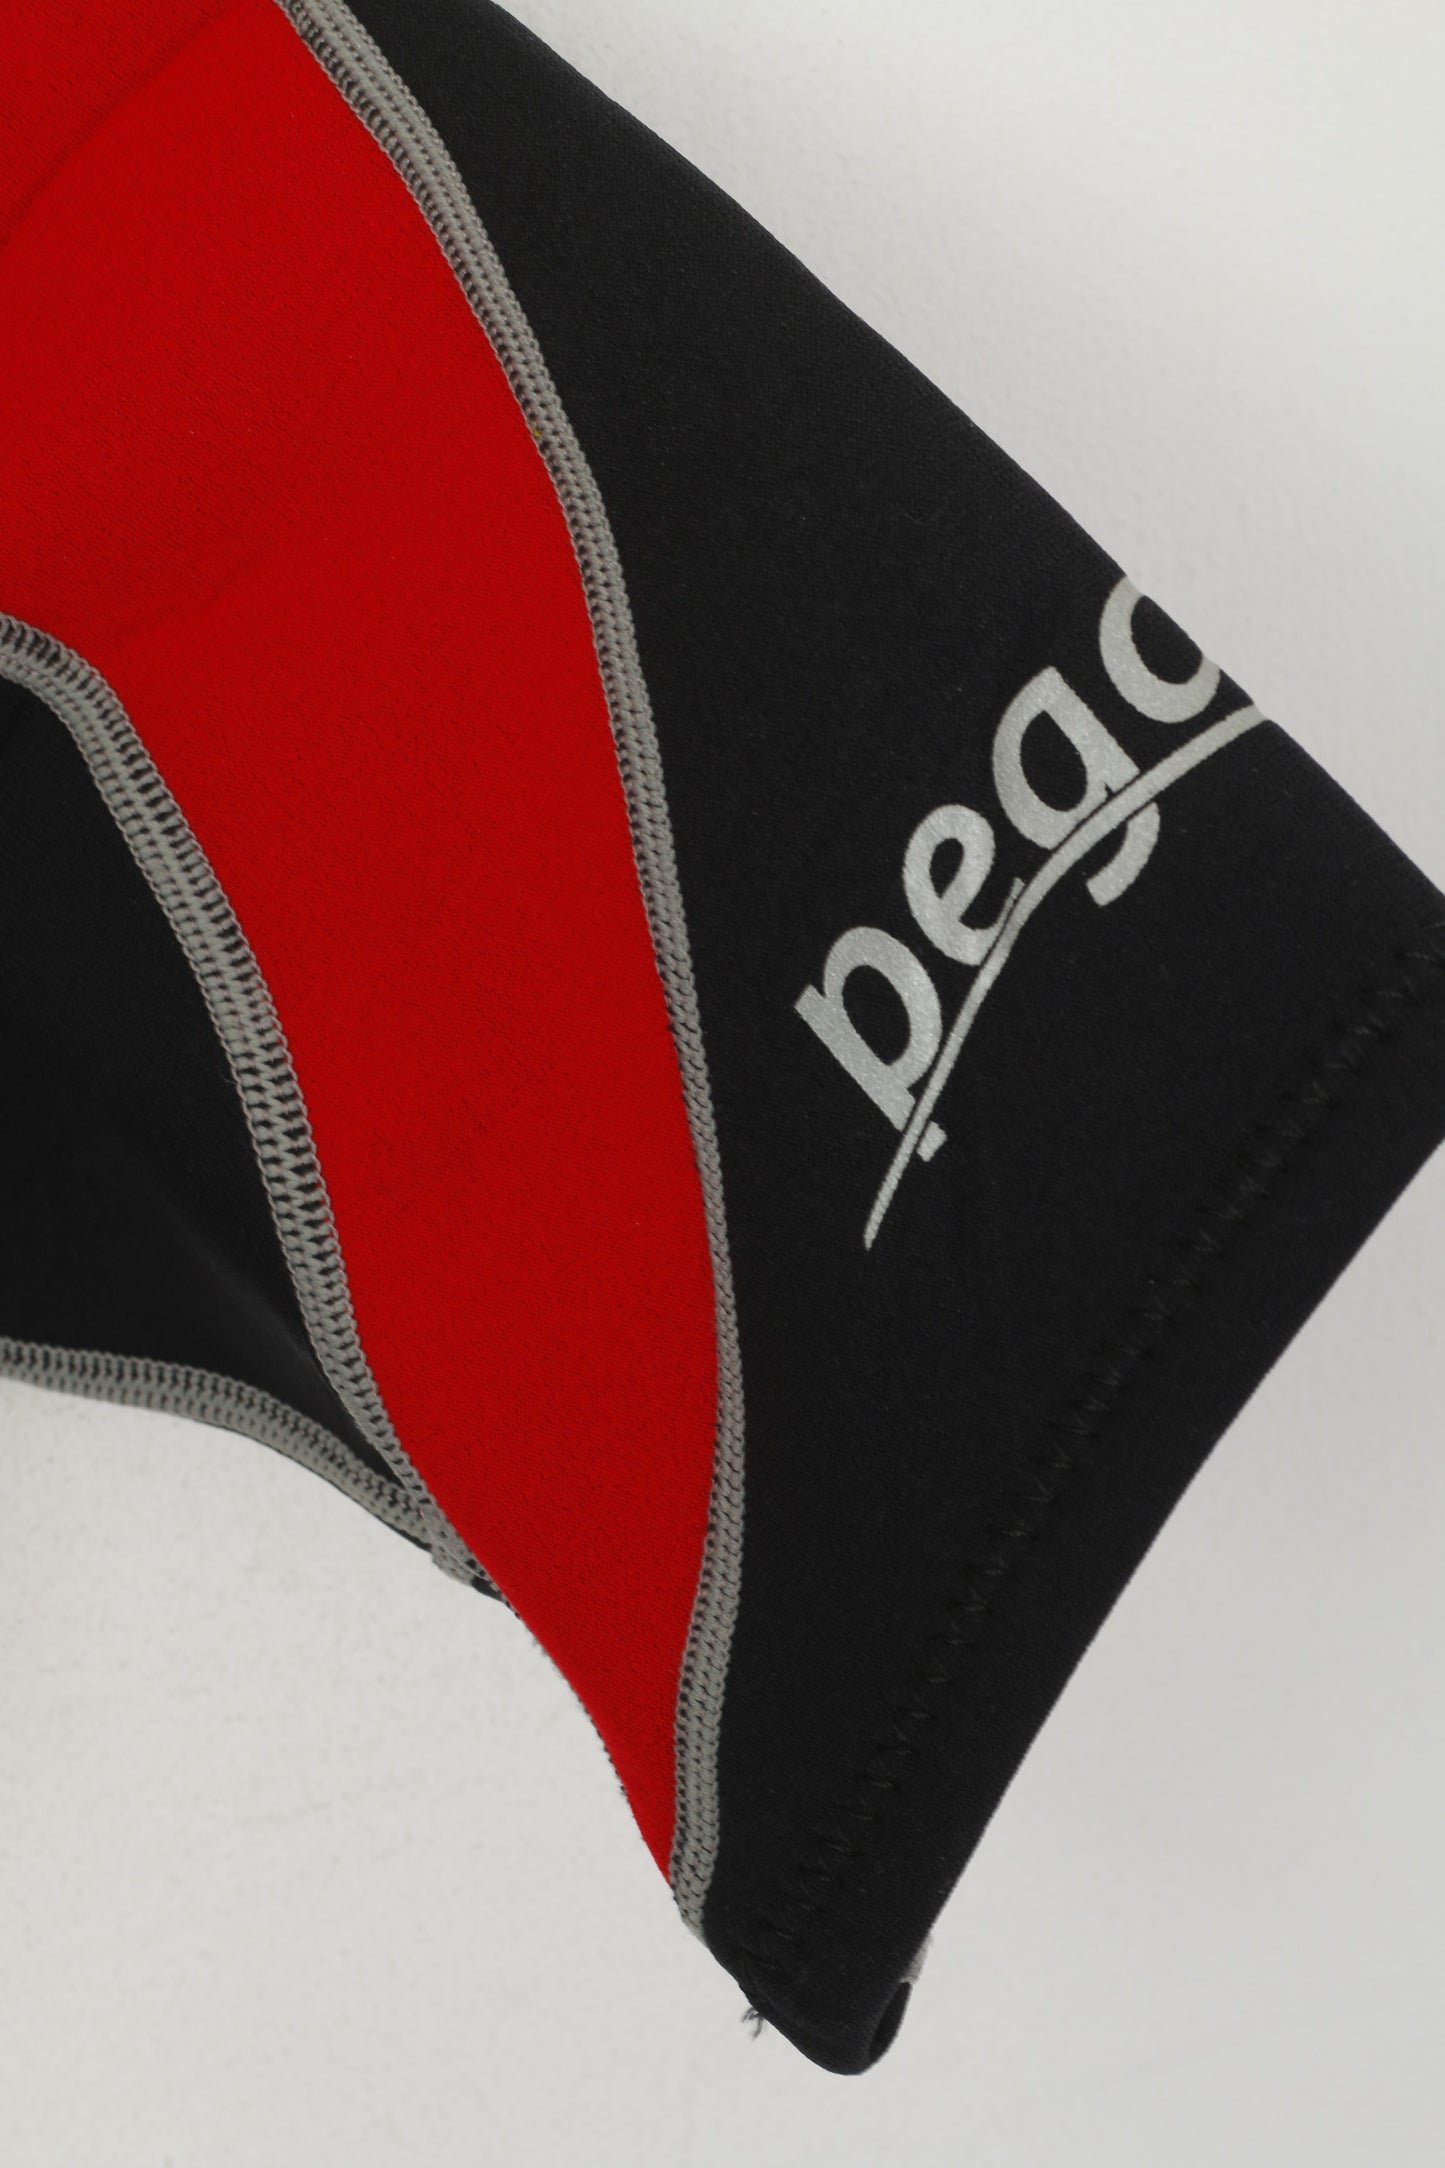 Pegaso Unisex S Wetsuit Black Red Surf Steamer Neoprene Swim Shortie Wet Suit